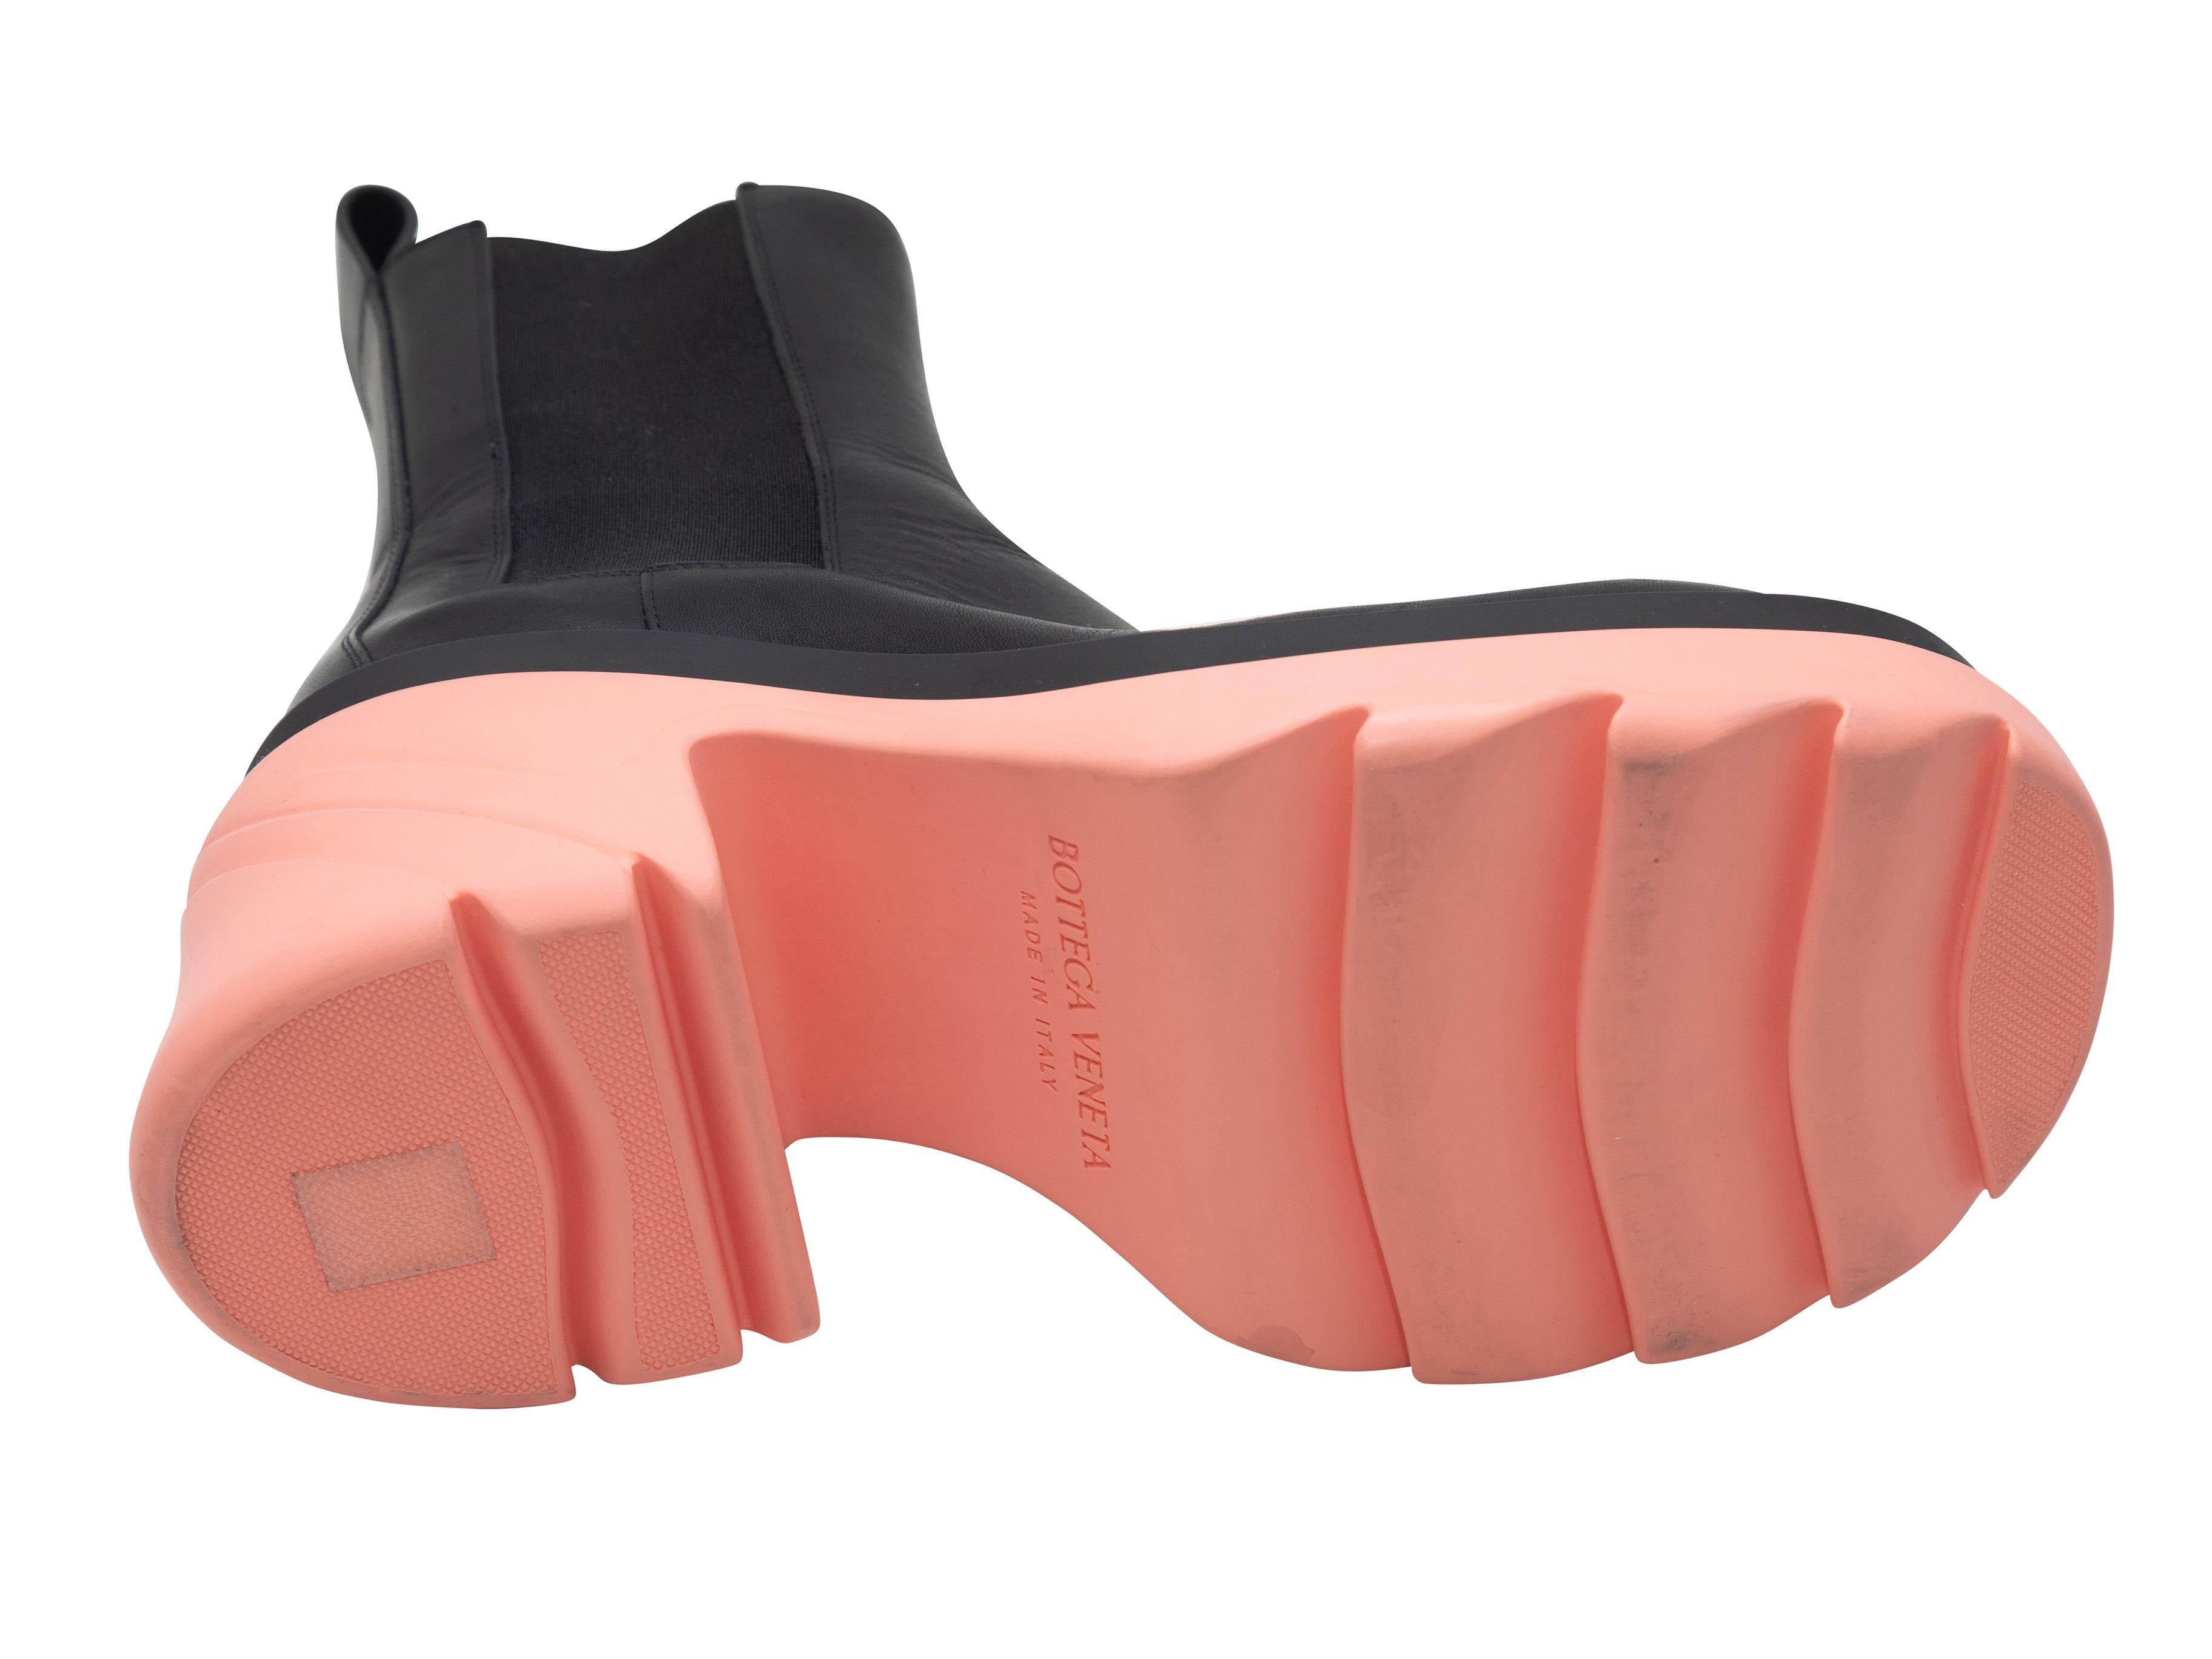 Product Details: Black leather Flash pull-on platform ankle boots by Bottega Veneta. Elasticized gores at sides. Pink rubber soles. 1.5